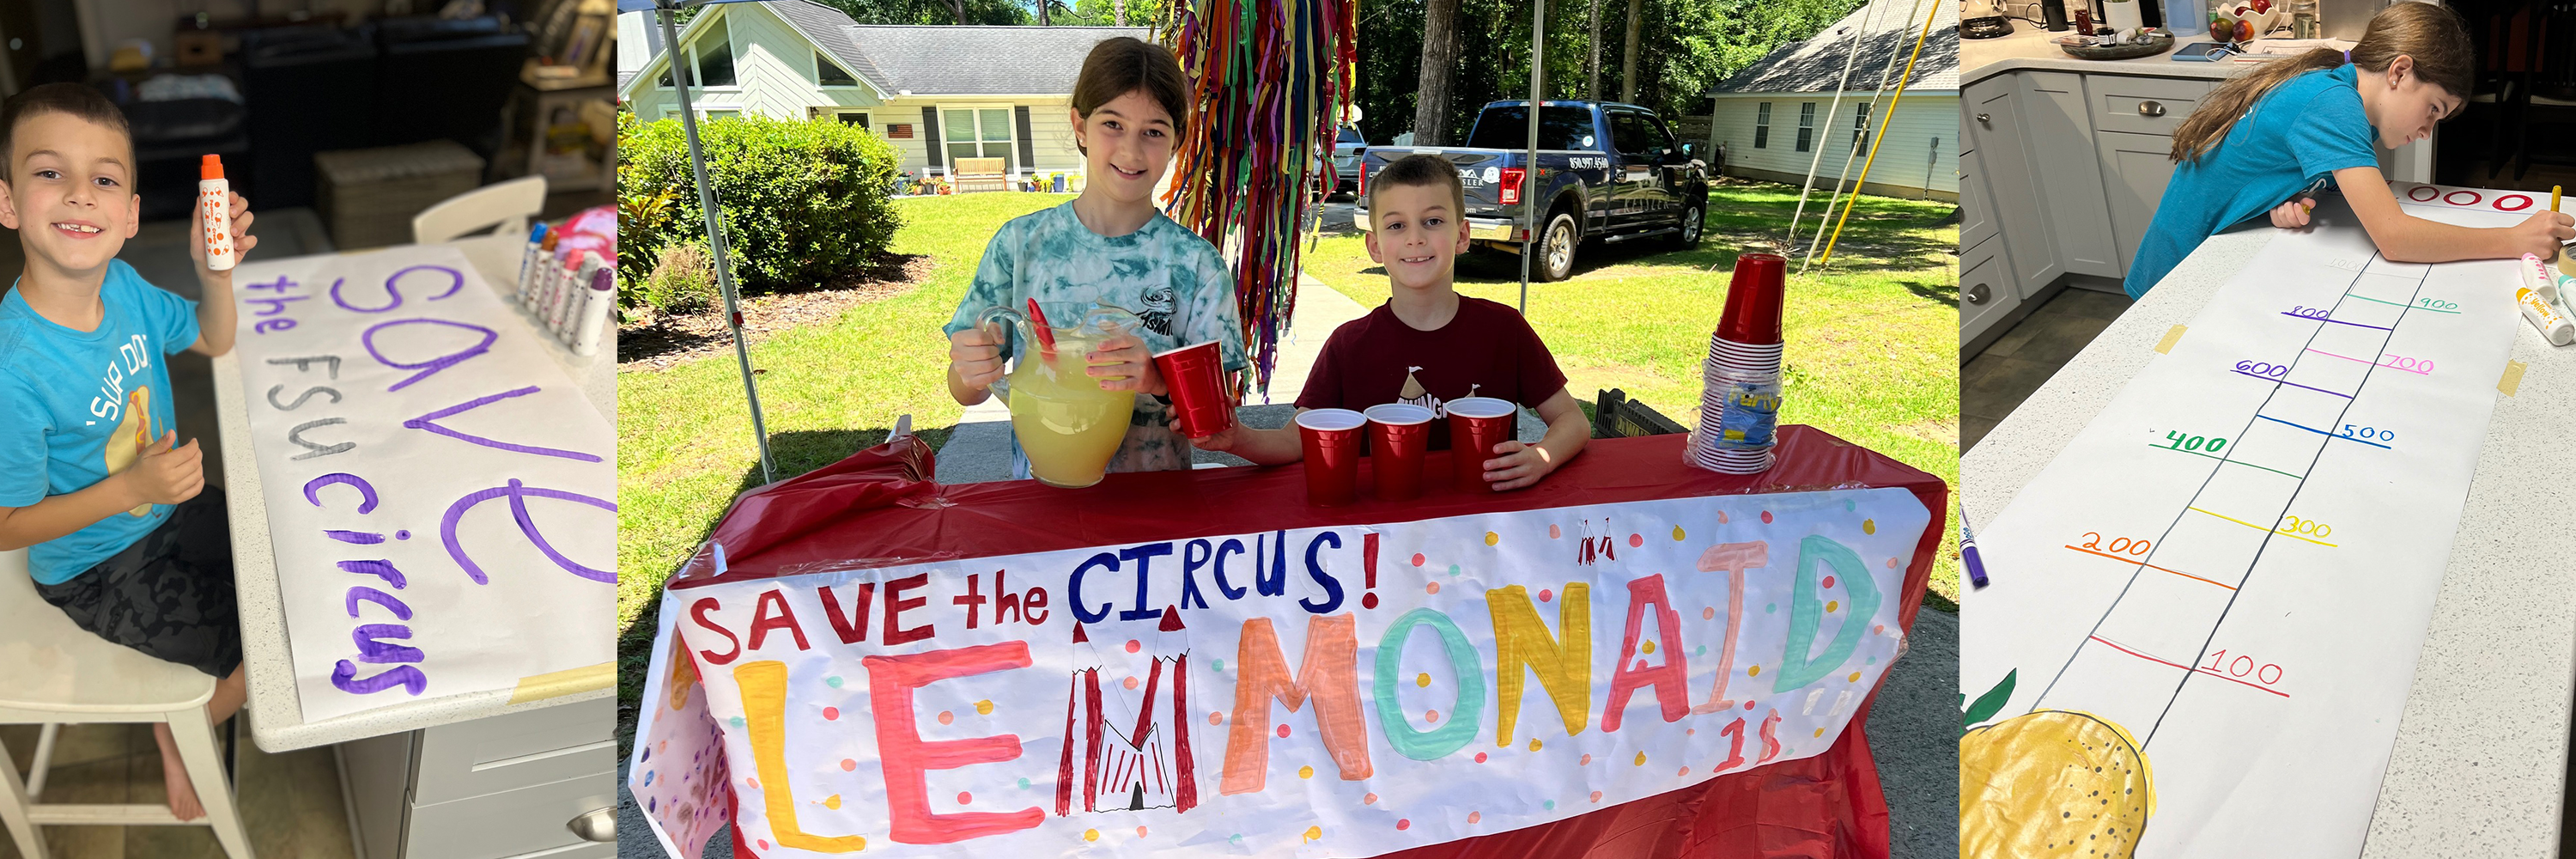 Kids Save the Circus